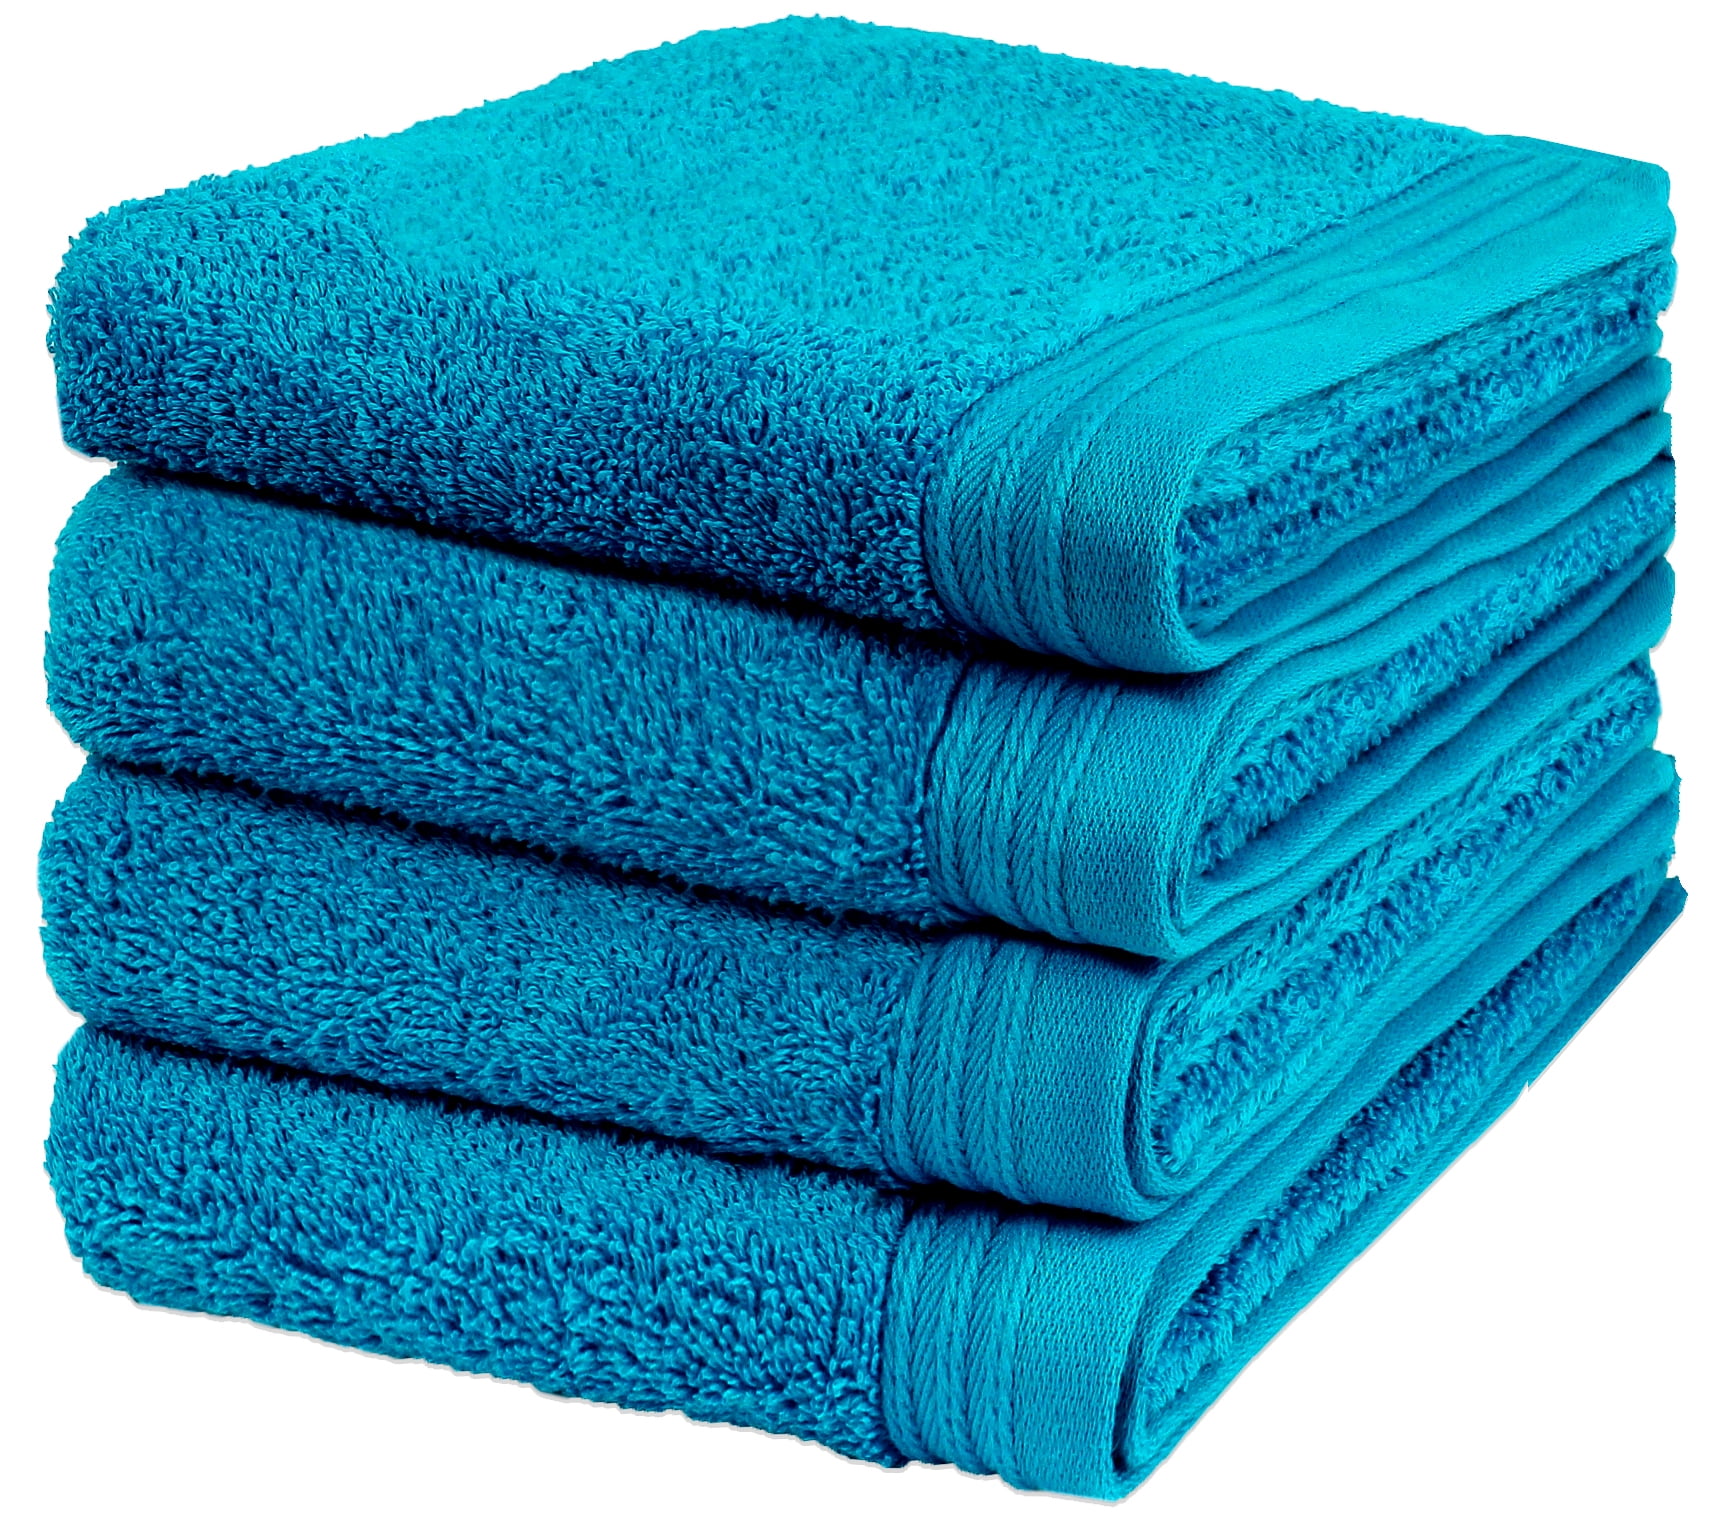 12 Pieces 100% Cotton Salon Towel Hand Towels Gym Nail Makeup Removal Towels 